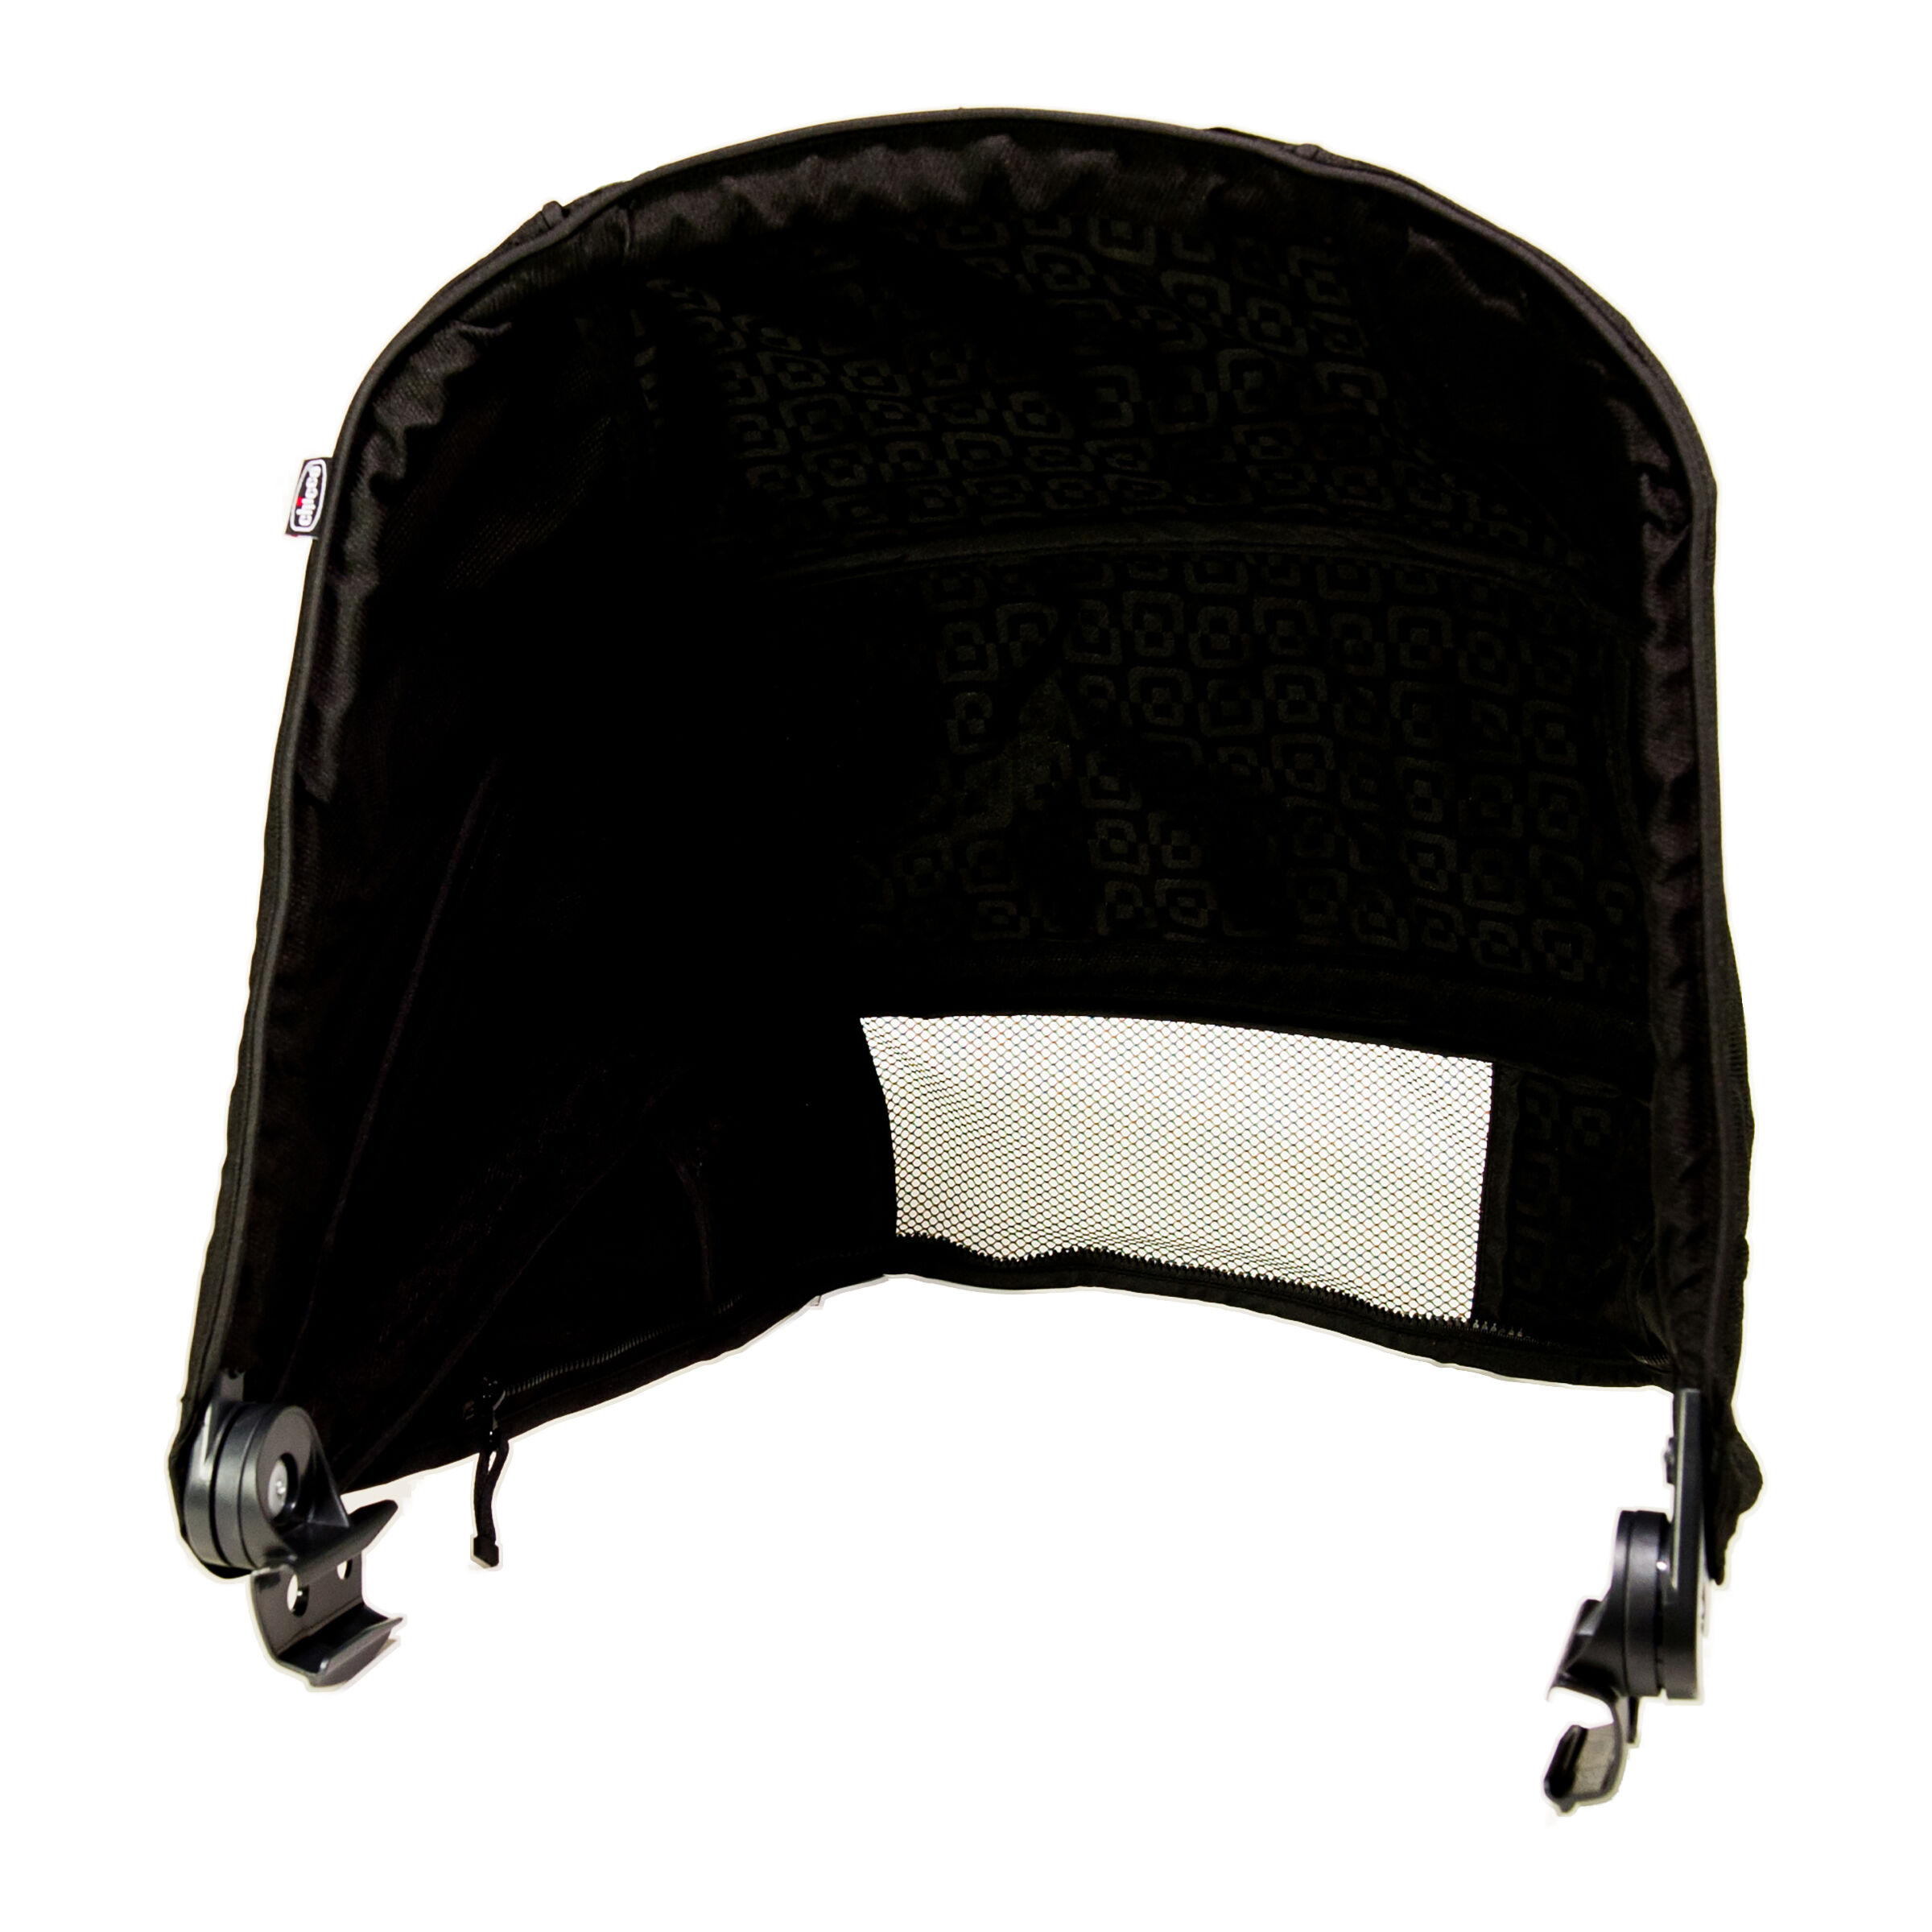 stroller hood replacement